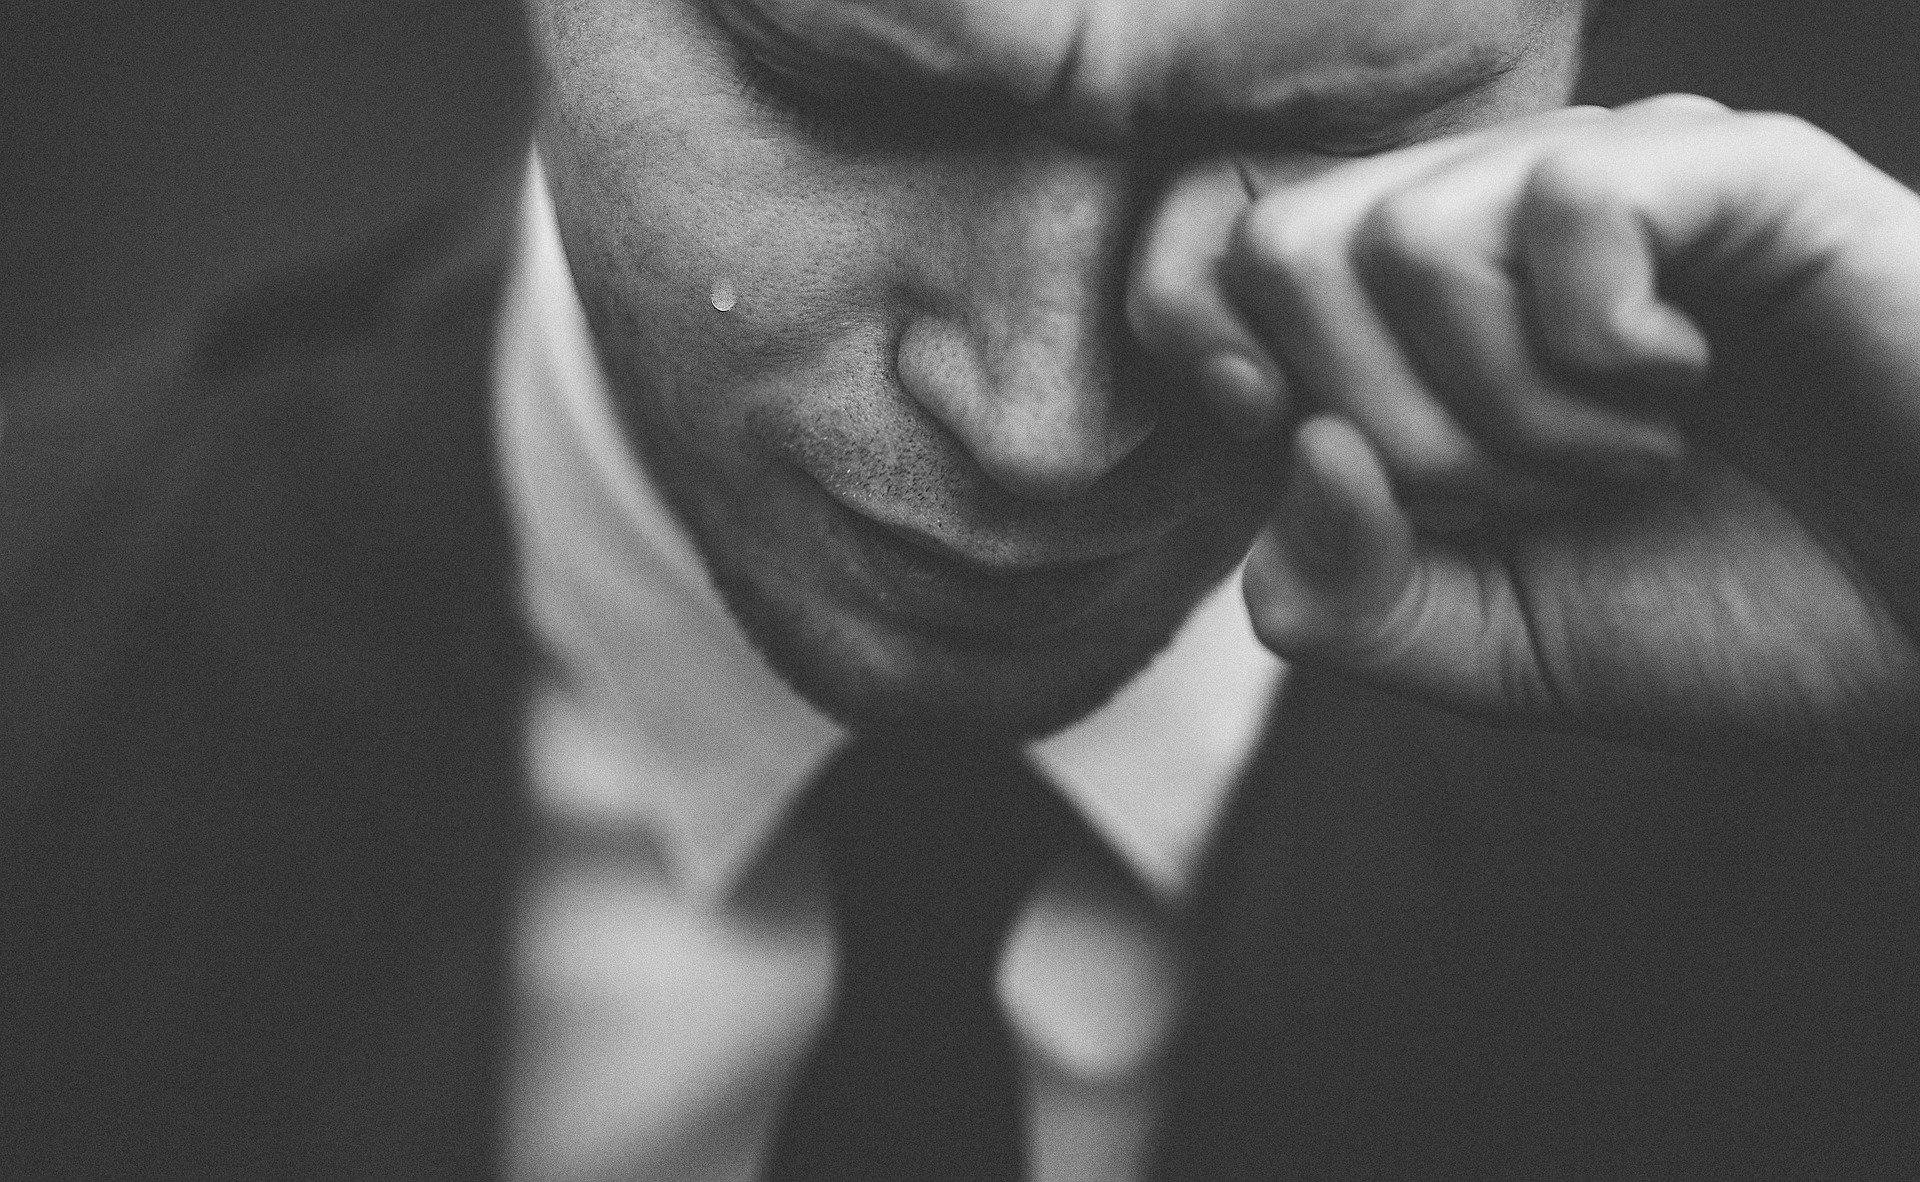 A man cries. | Source: Pixabay